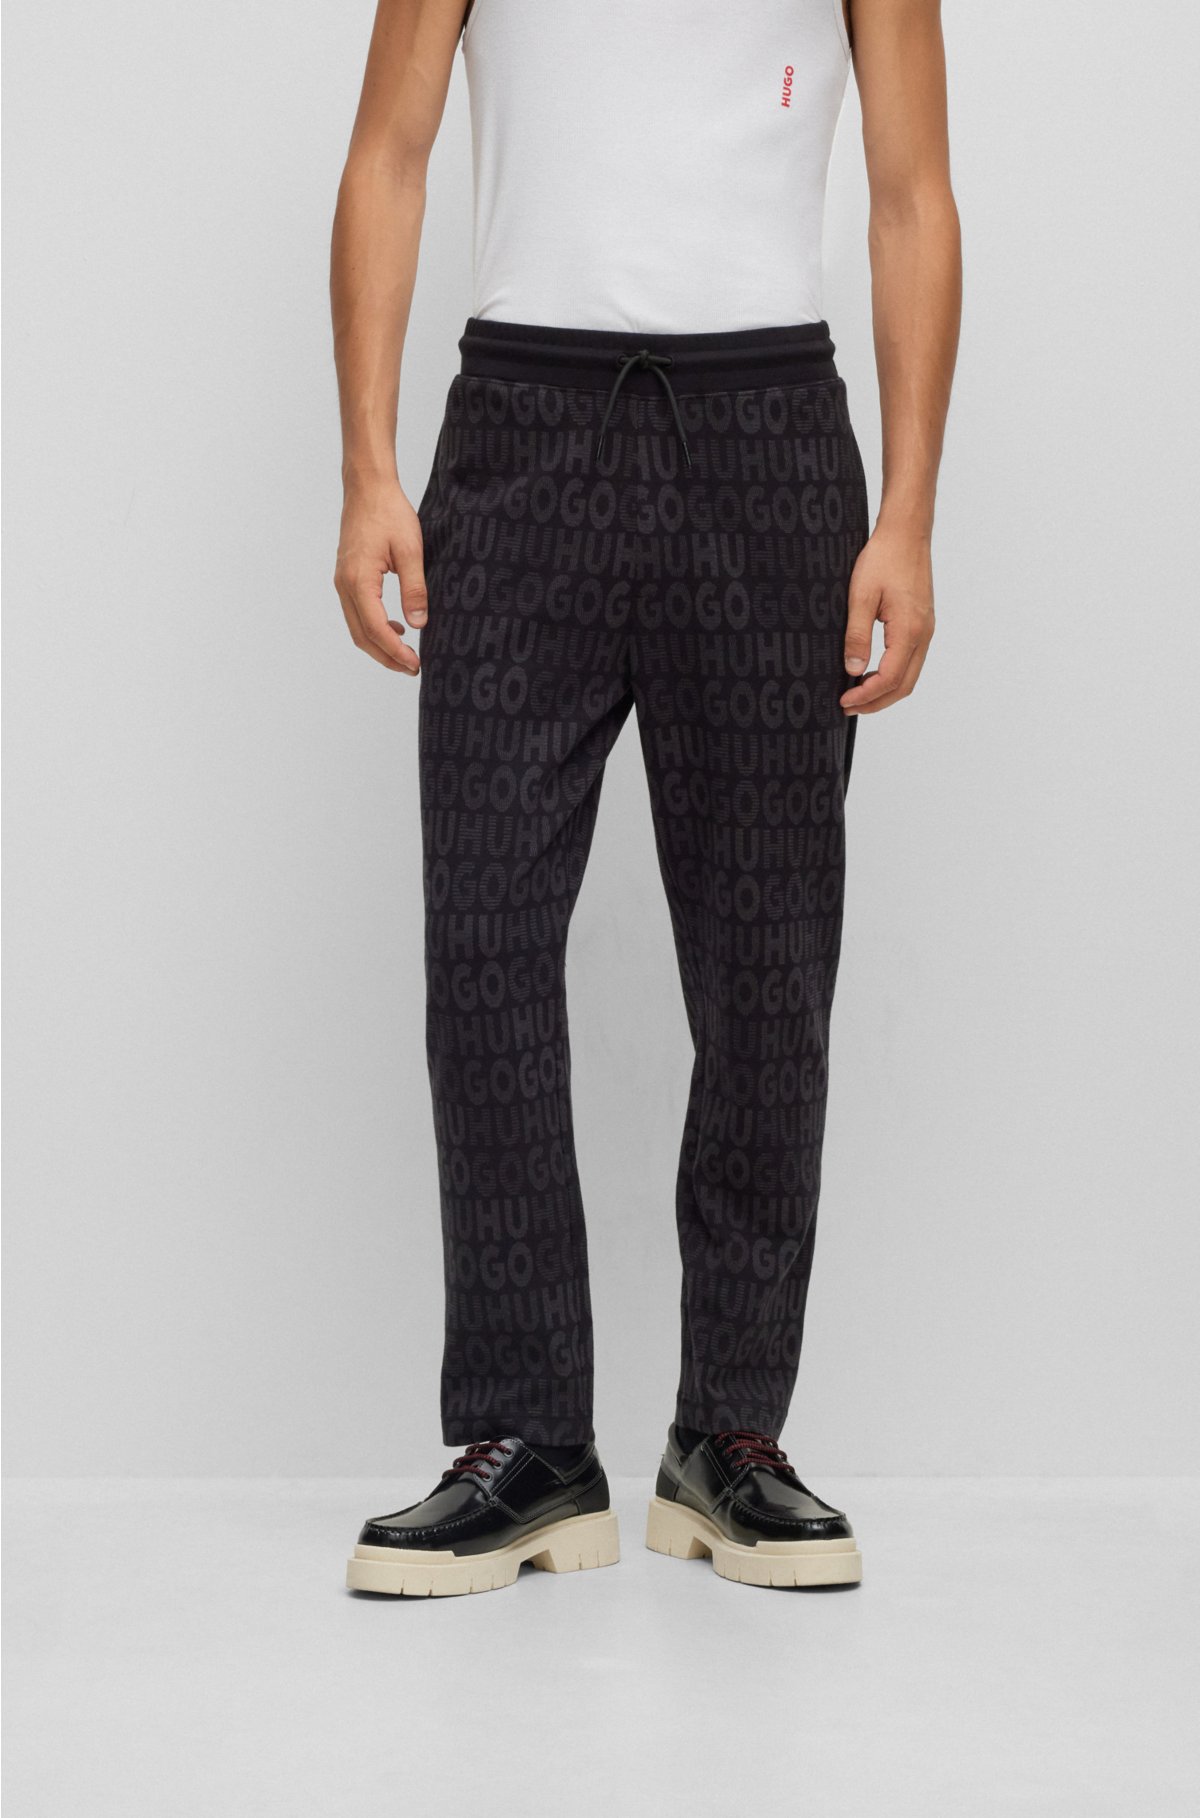 Dolce & Gabbana Men's Jersey Jacquard Jogging Pants